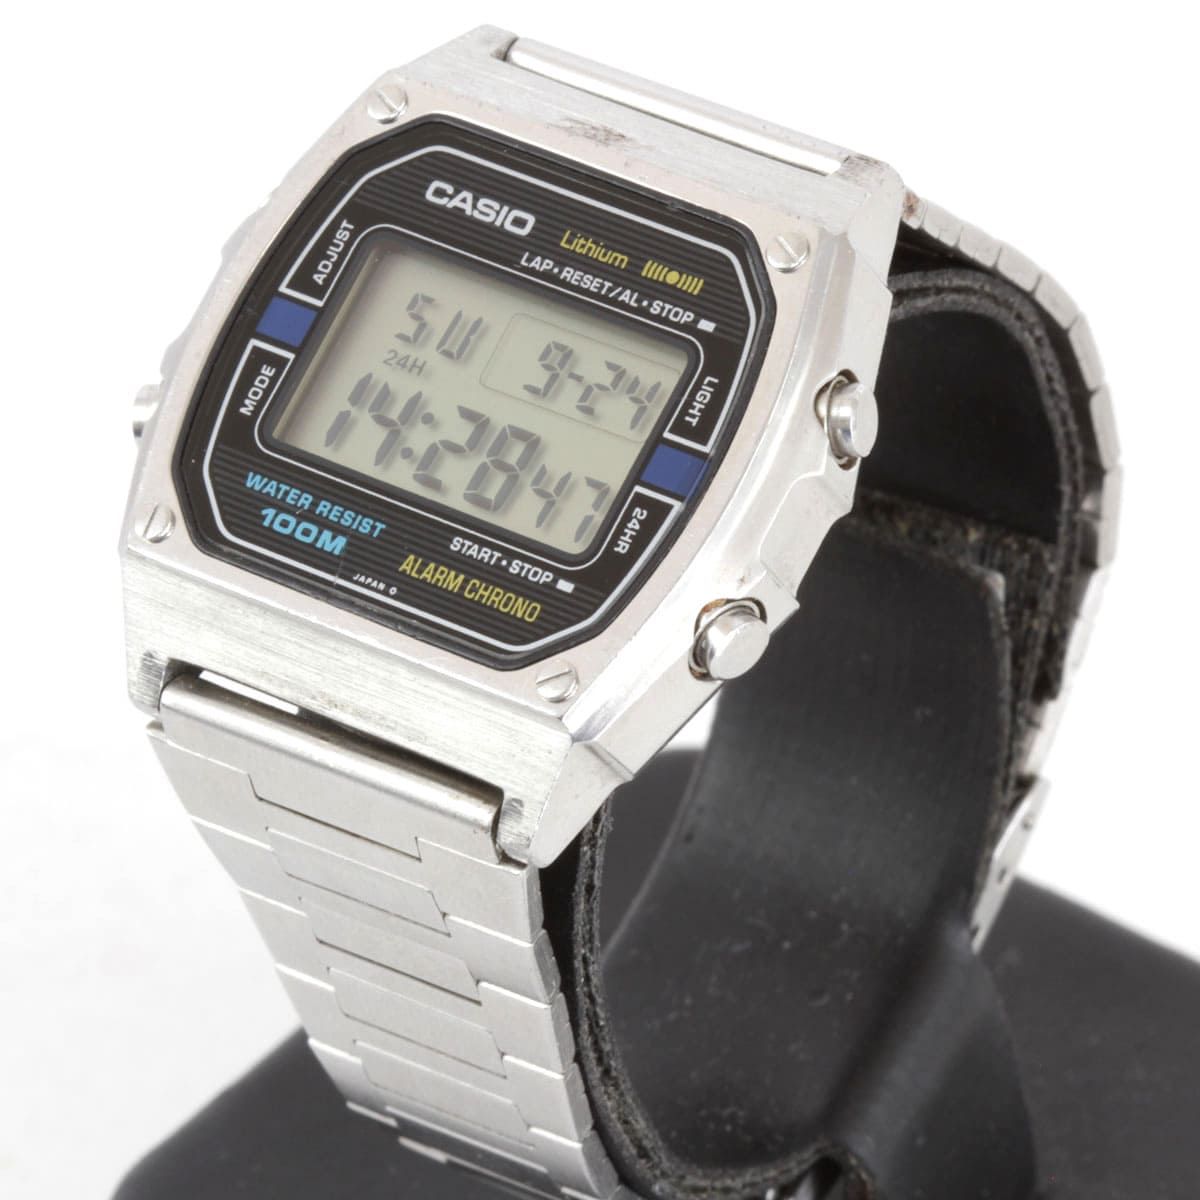 『USED』 CASIO スクリューバッグ W-760 100M 腕時計 メンズ